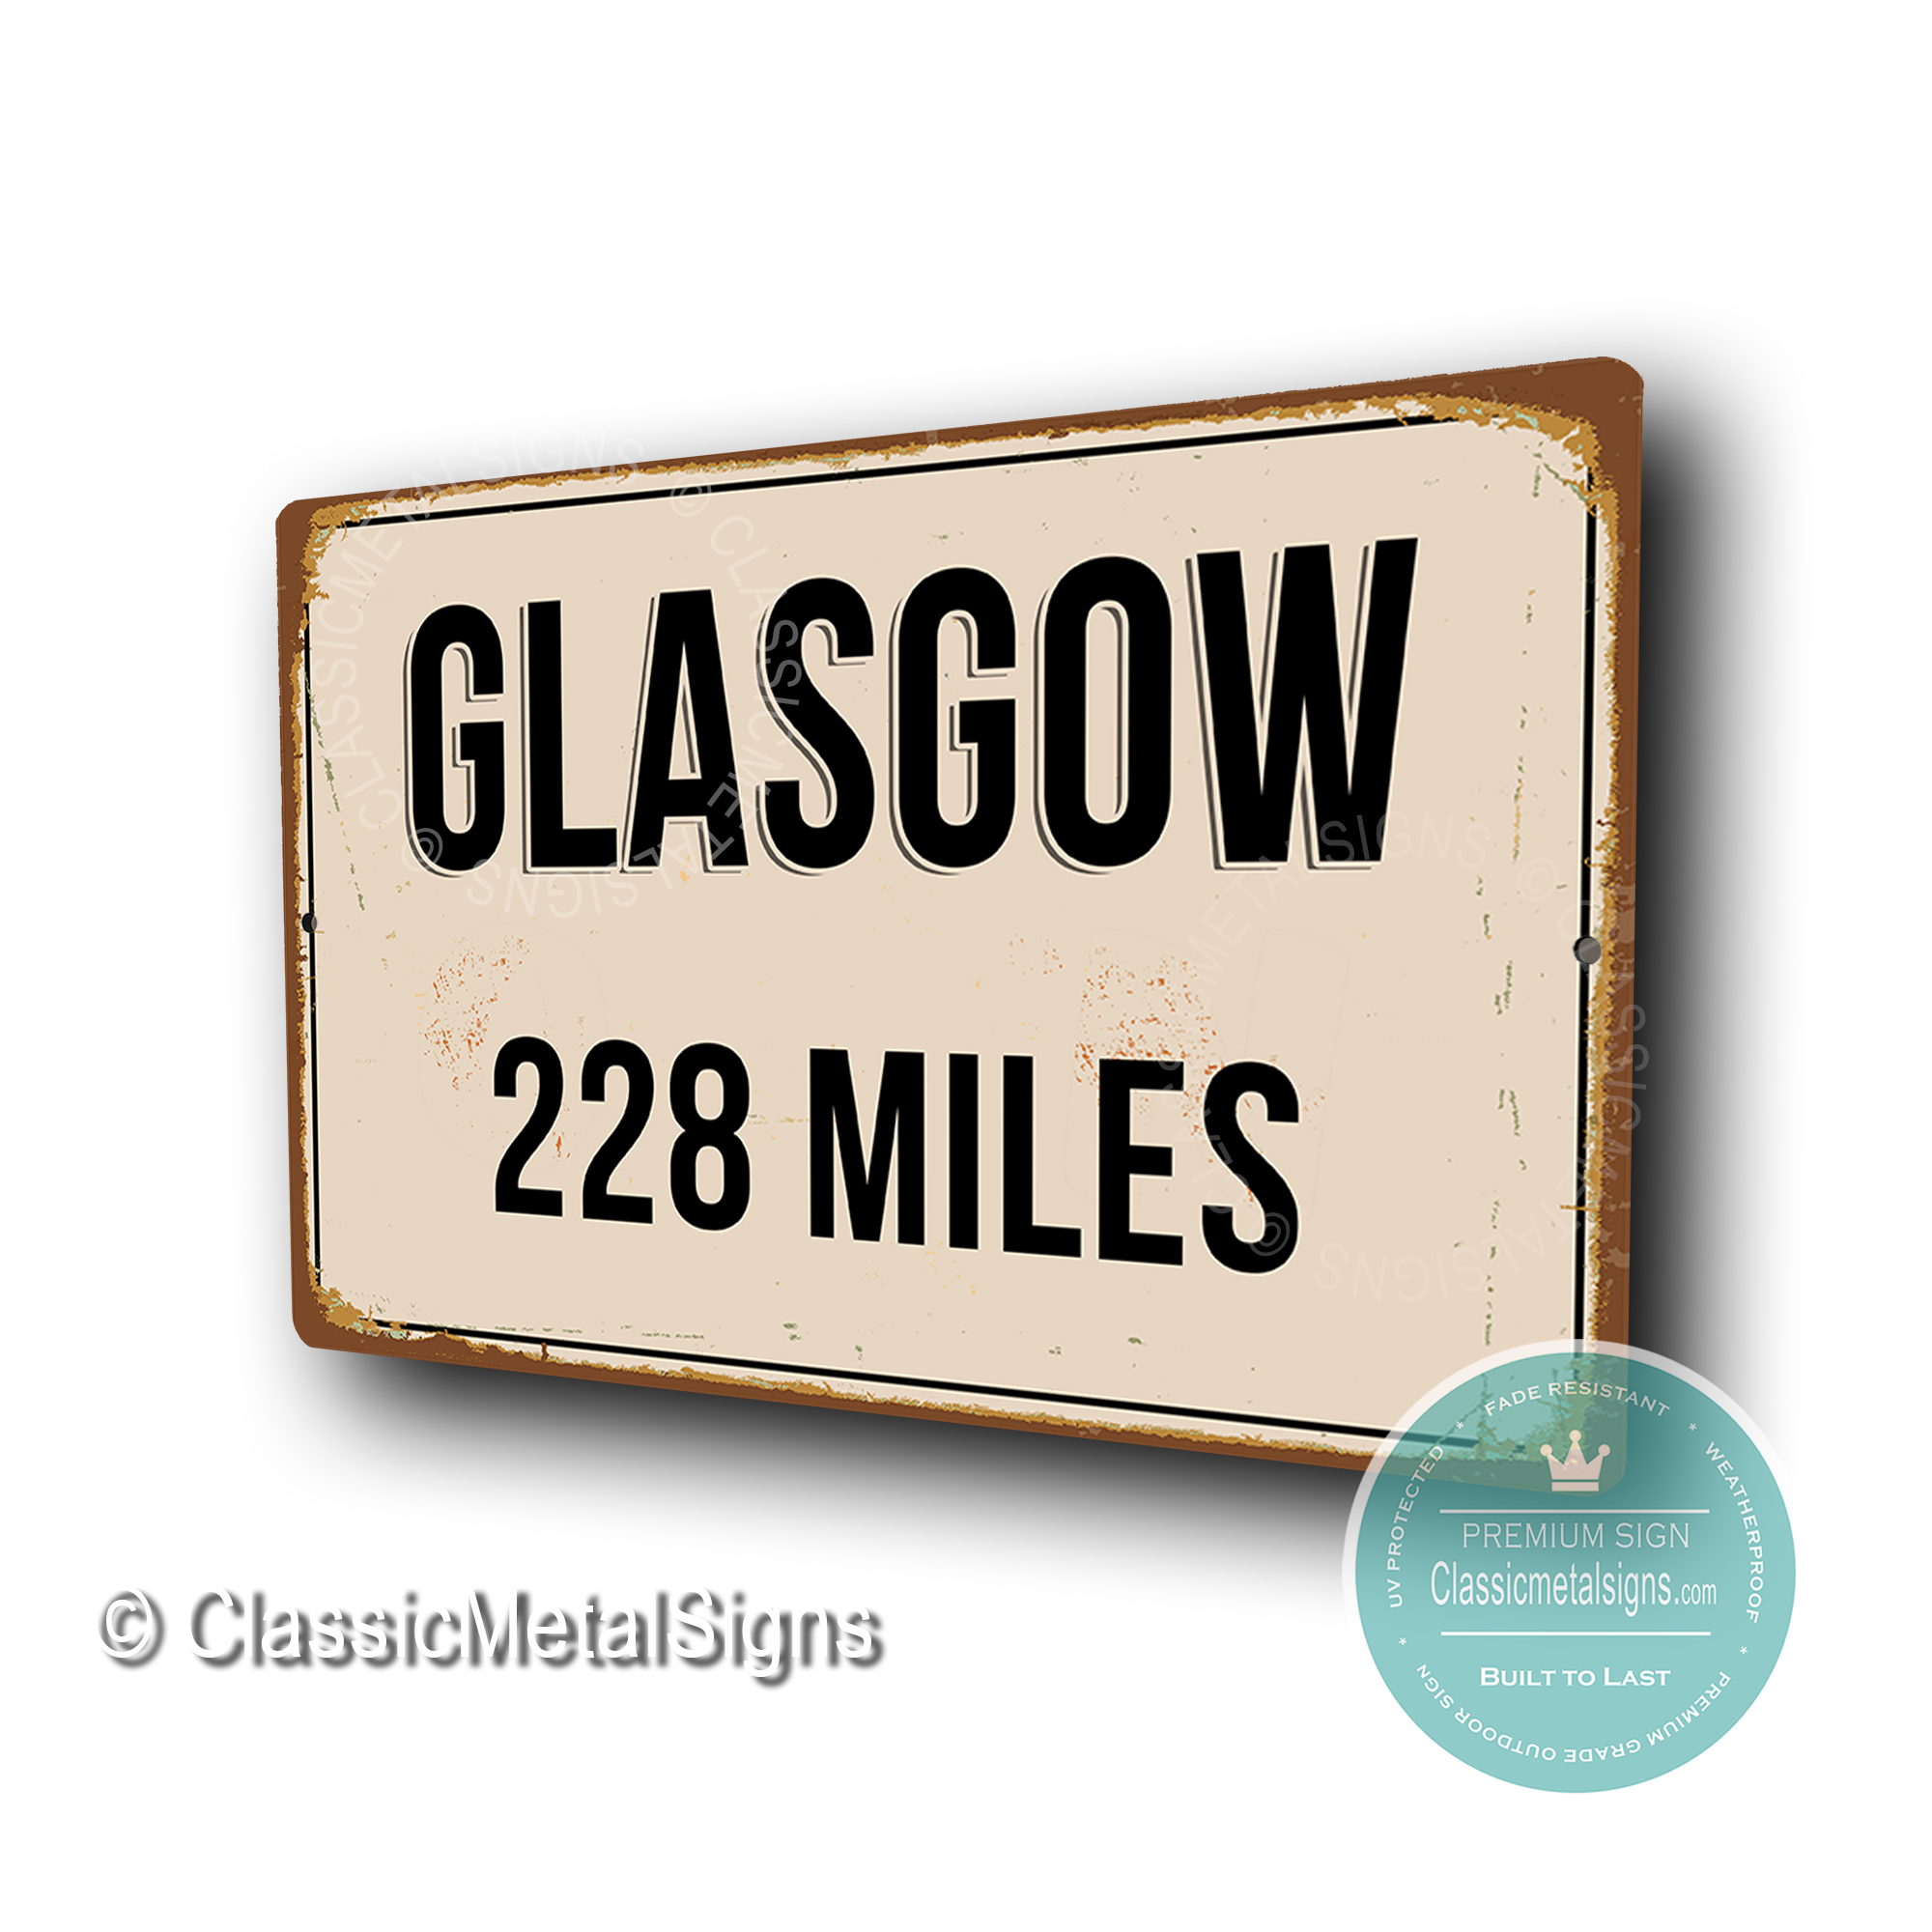 Glasgow Street Signs